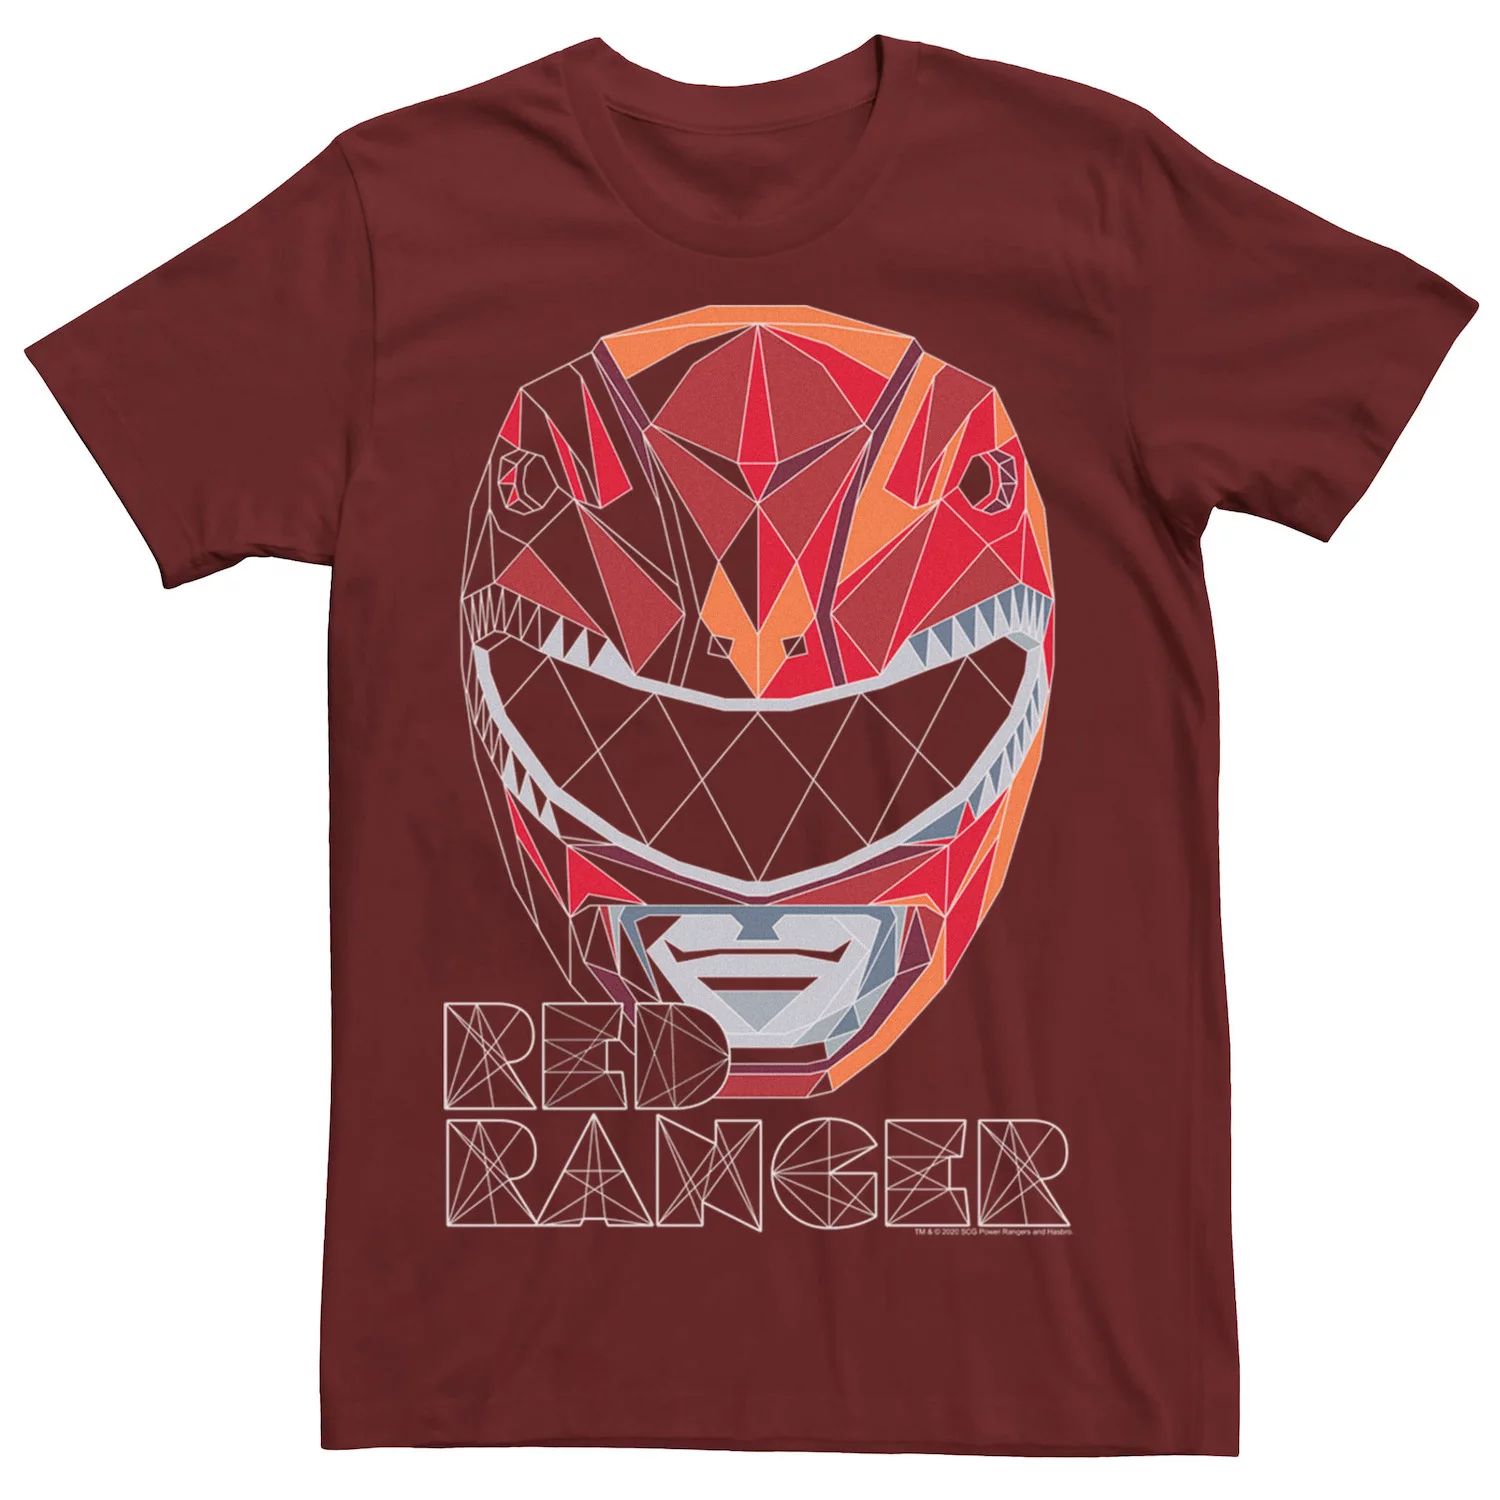 Мужская футболка Power Rangers Red Ranger Polygon с большим лицом Licensed Character